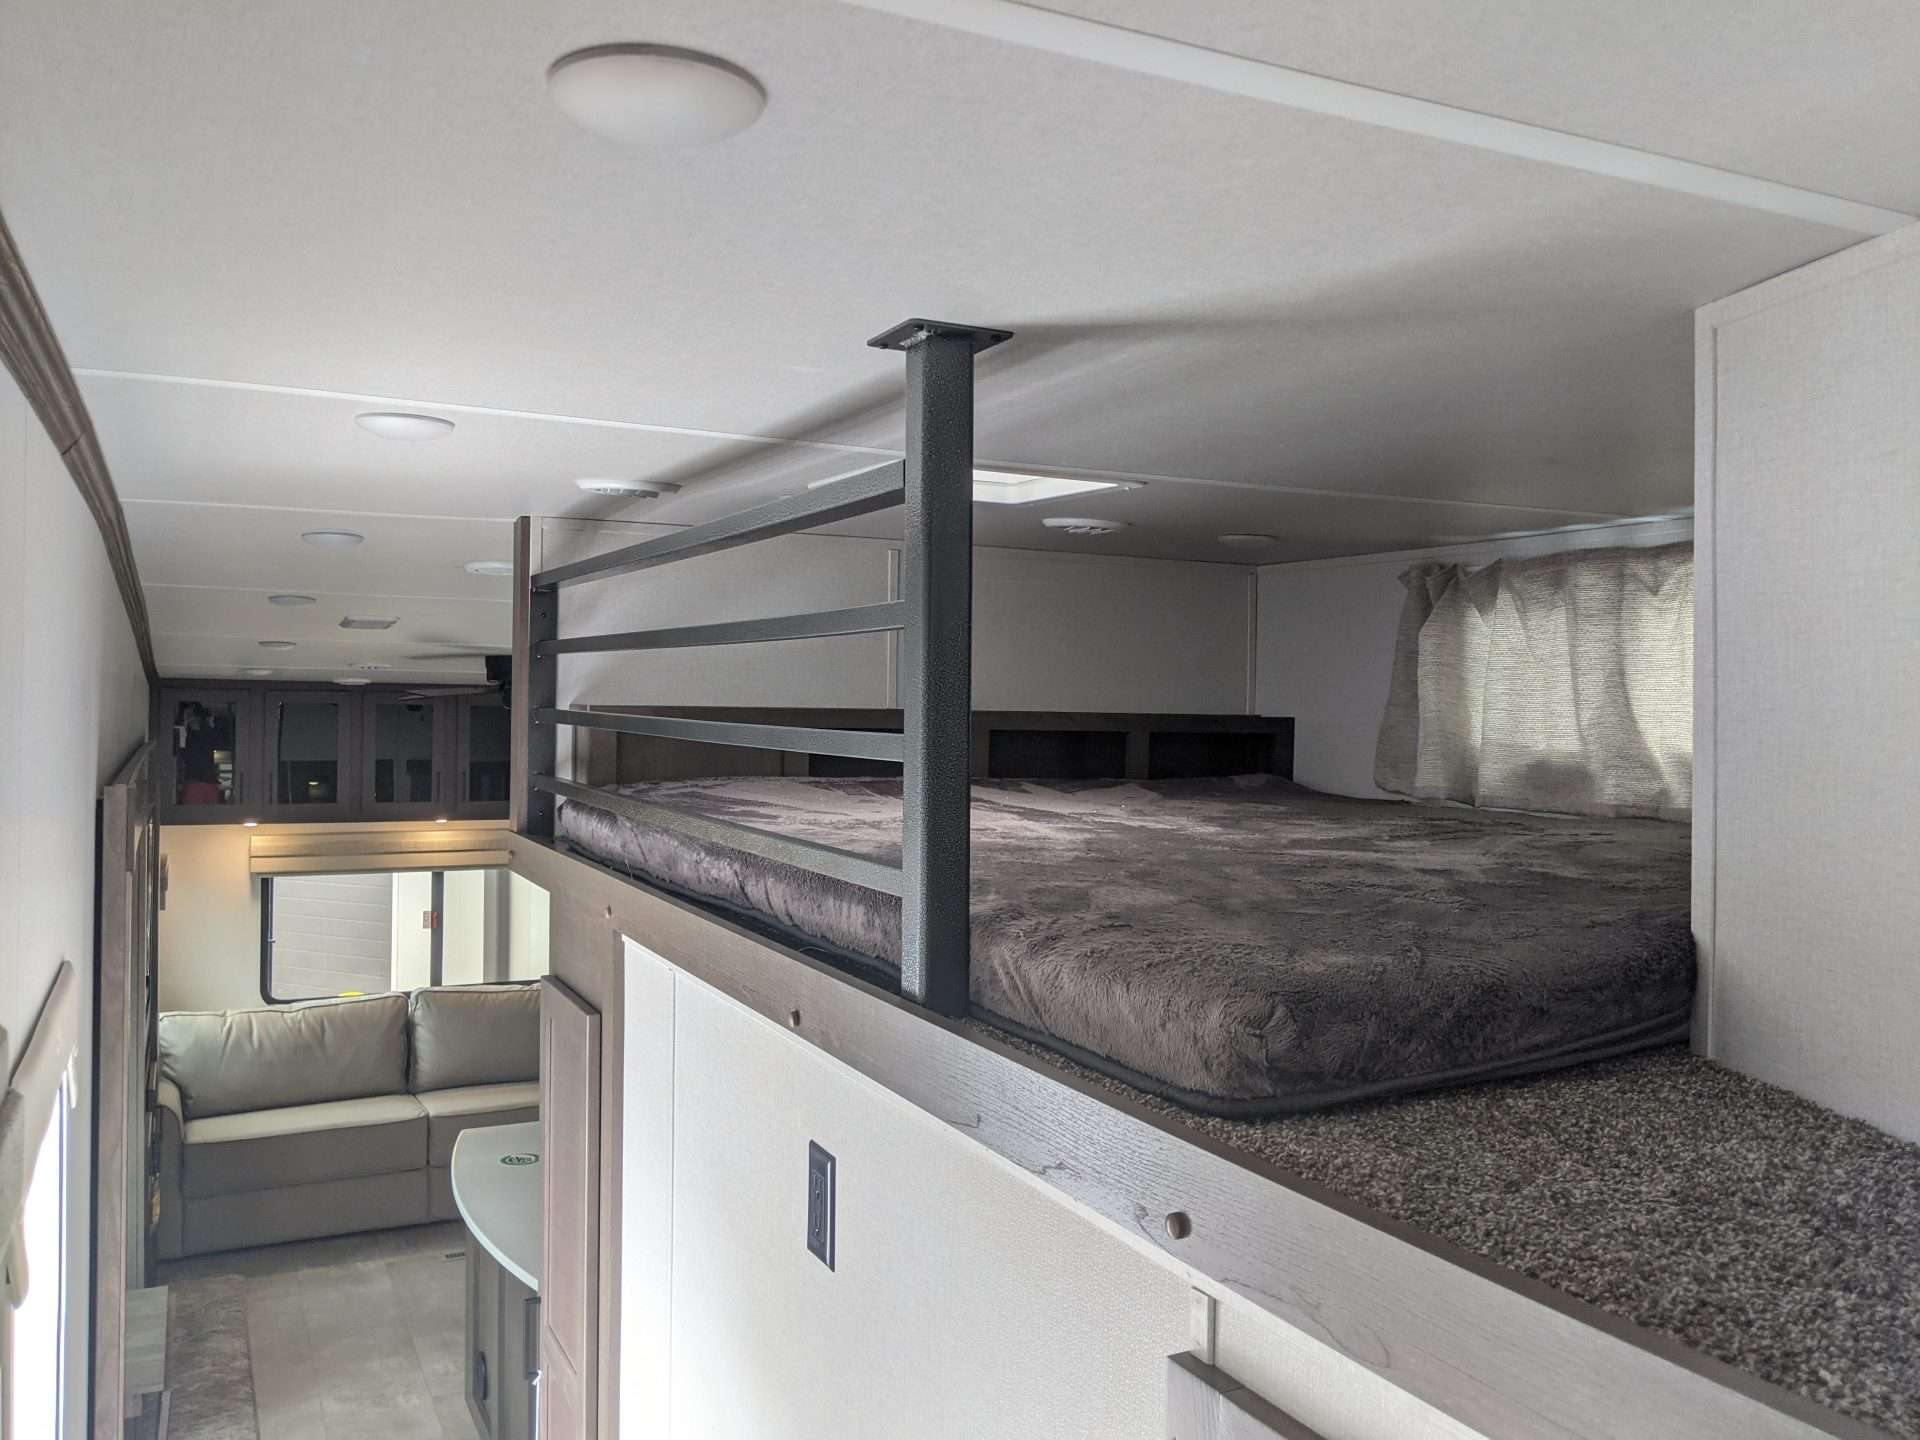 3-bedroom RV with loft